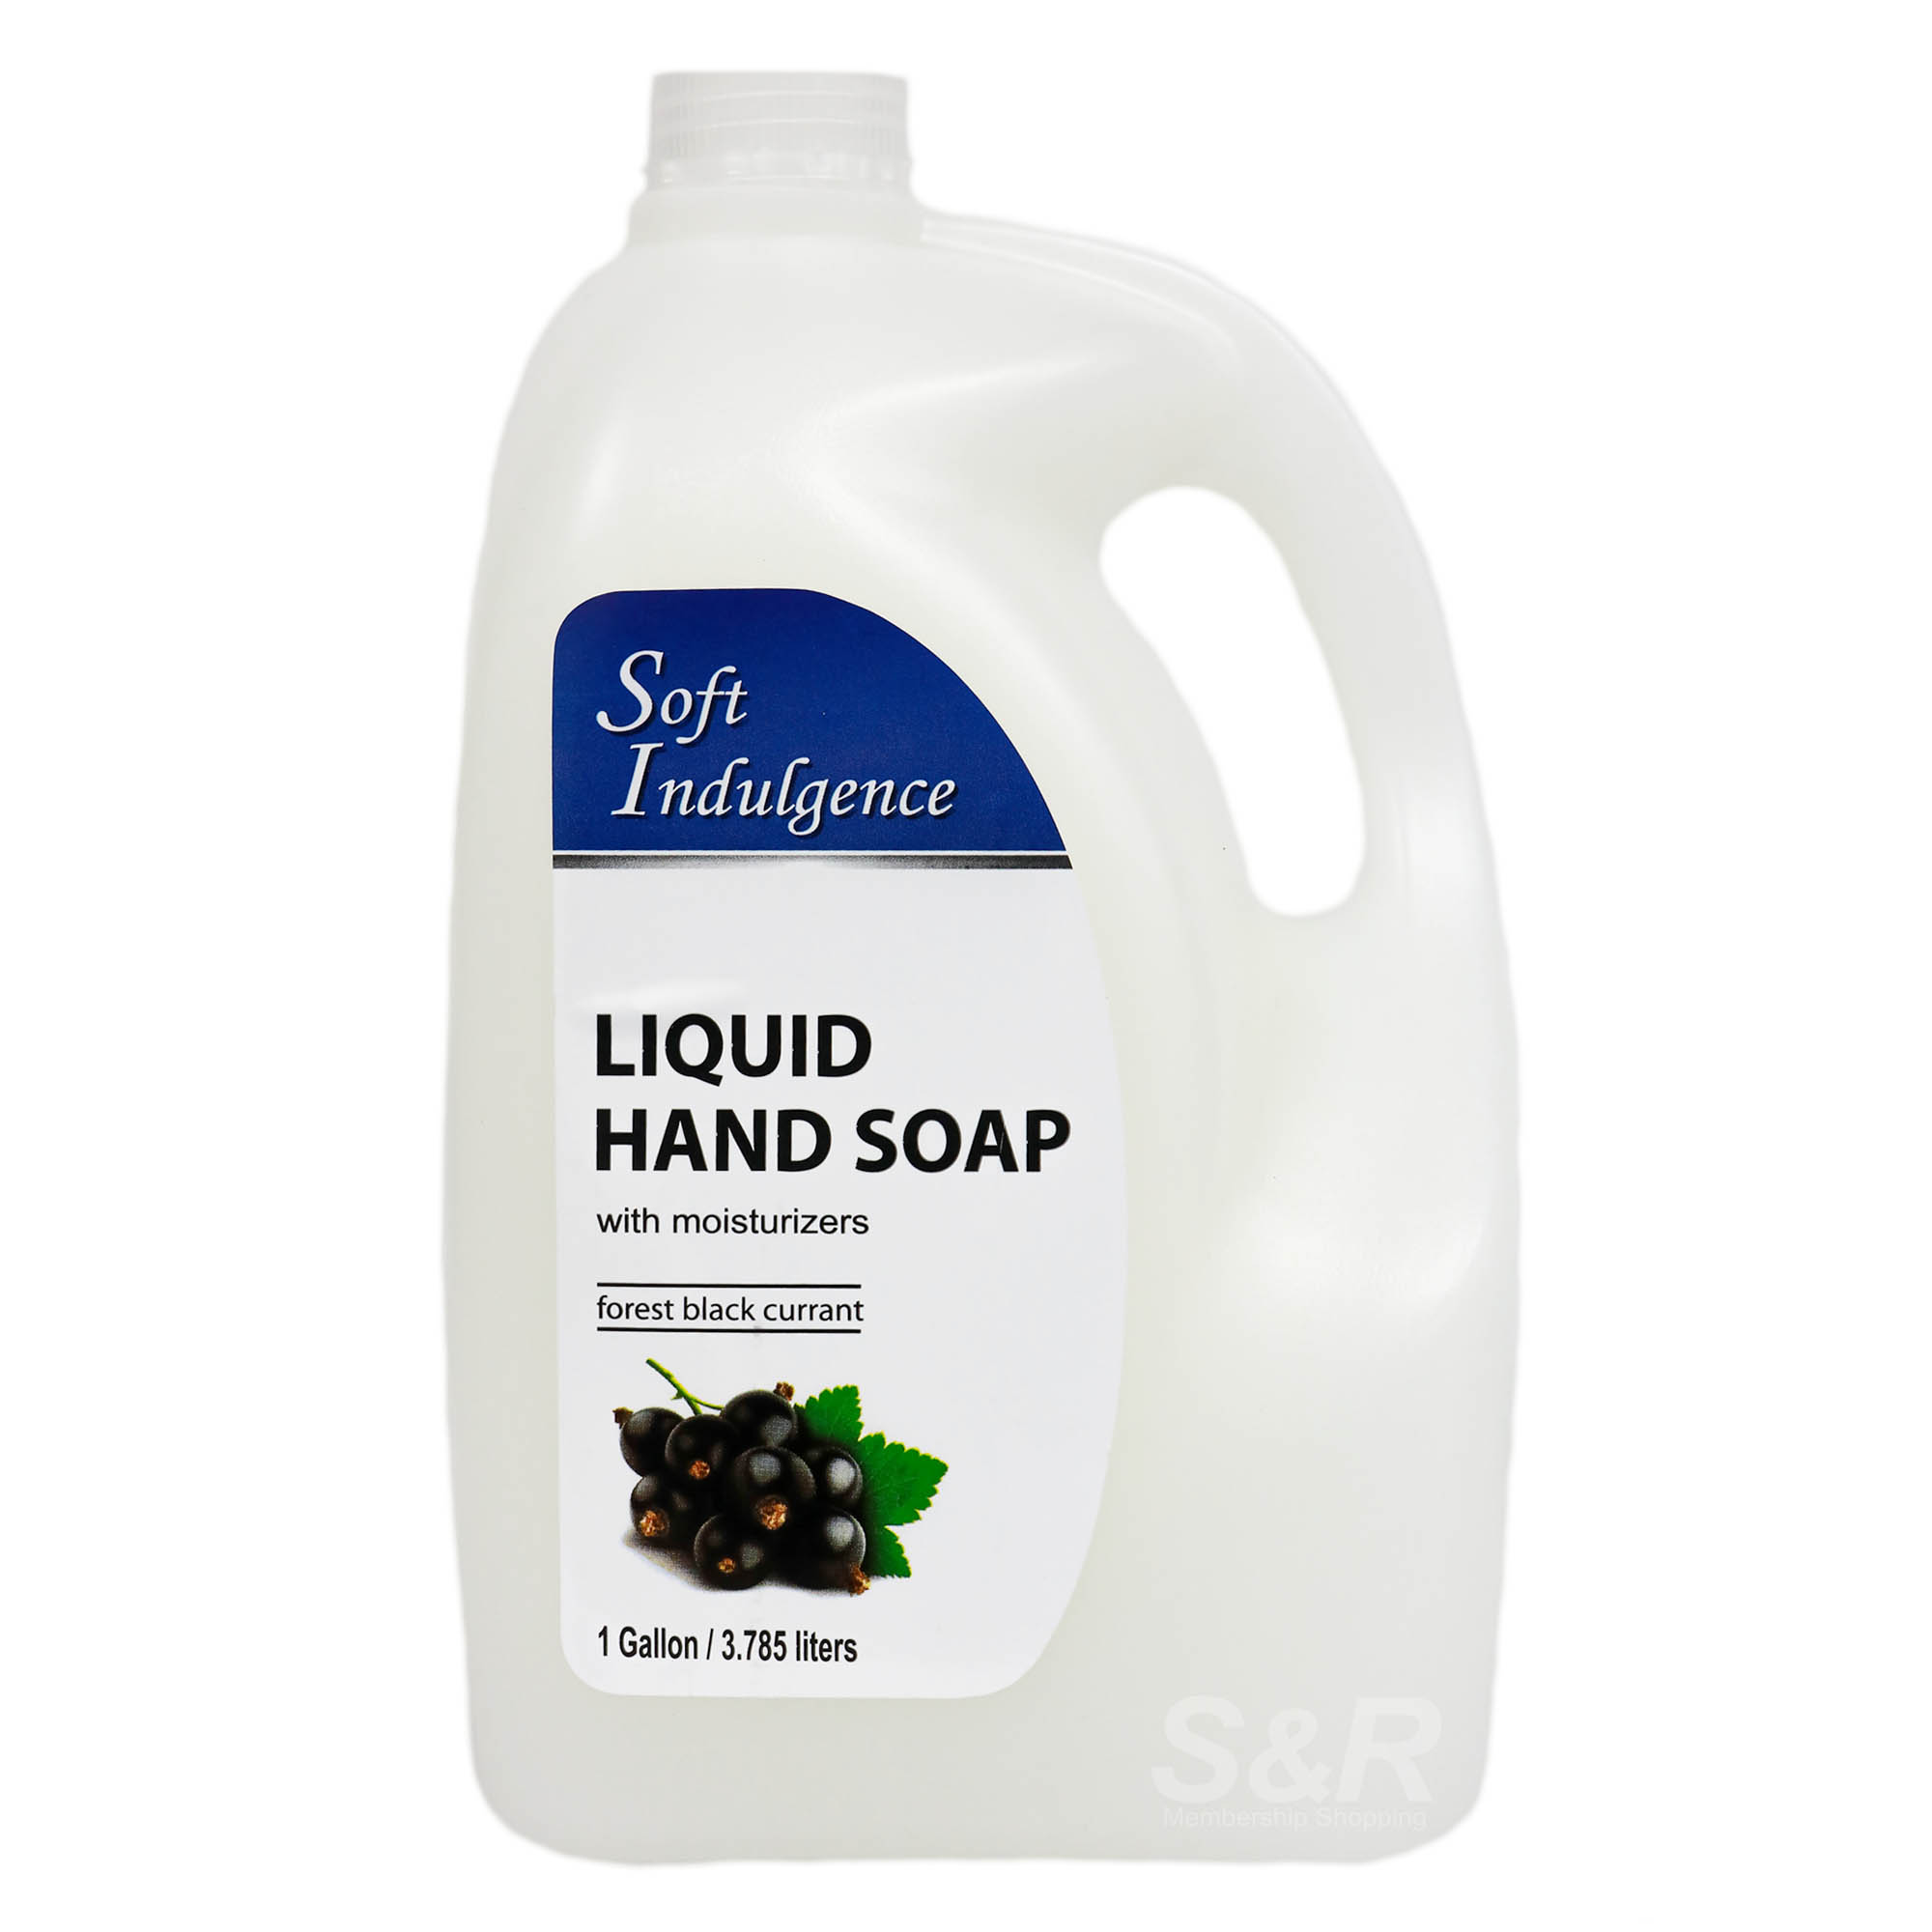 Soft Indulgence Liquid Moisturizing Hand Soap with Forest Black Currant 3.785L